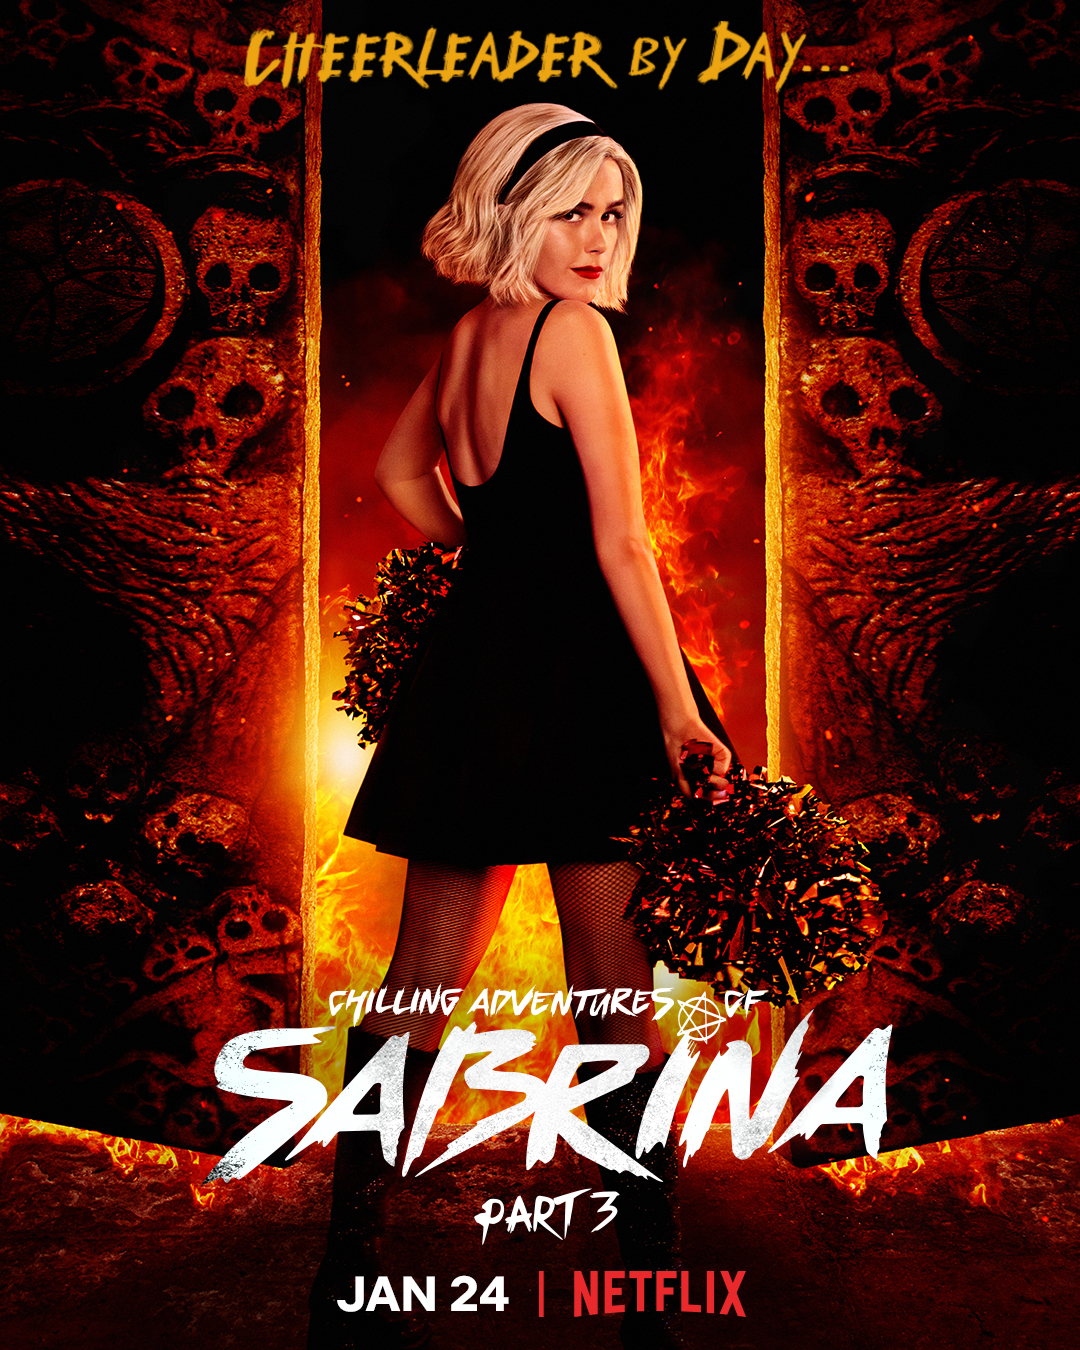 [TV] Chilling Adventures of Sabrina Part 3 (Netflix)